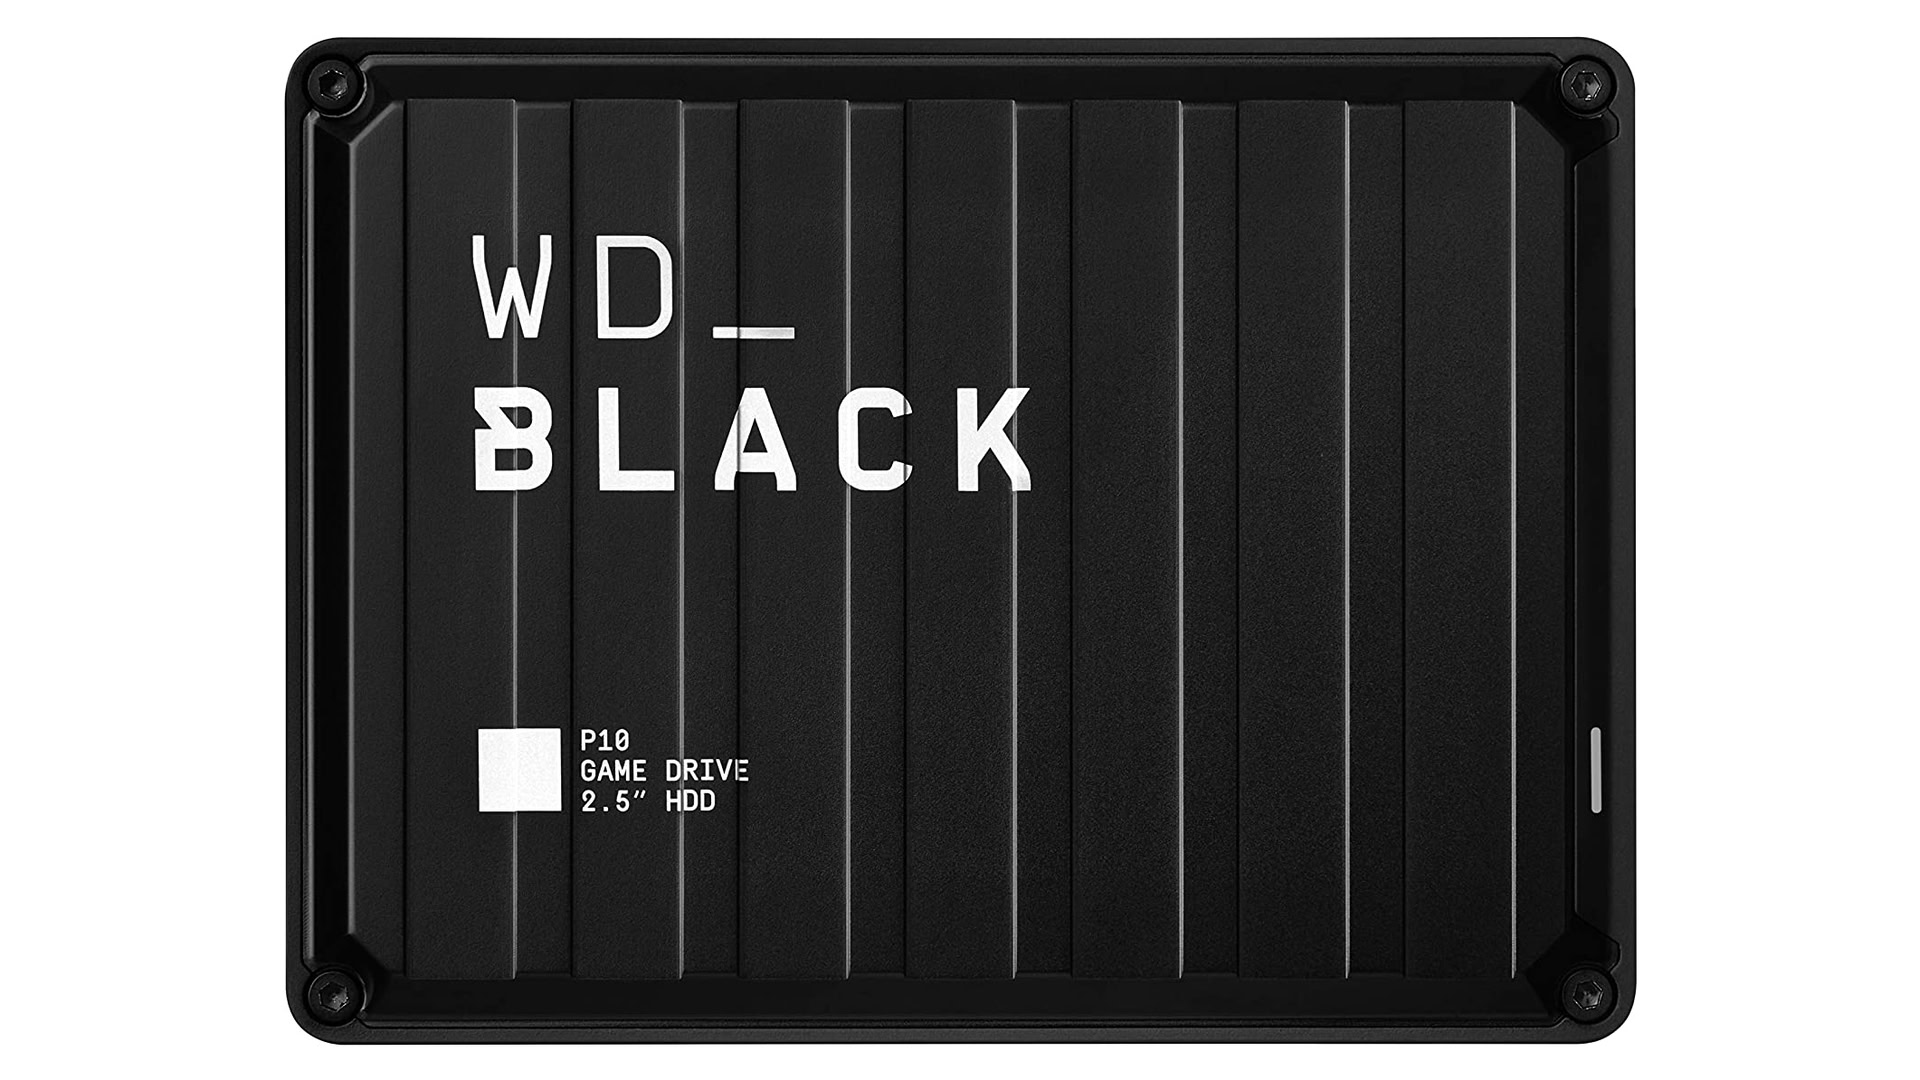 WD Black external hard drive